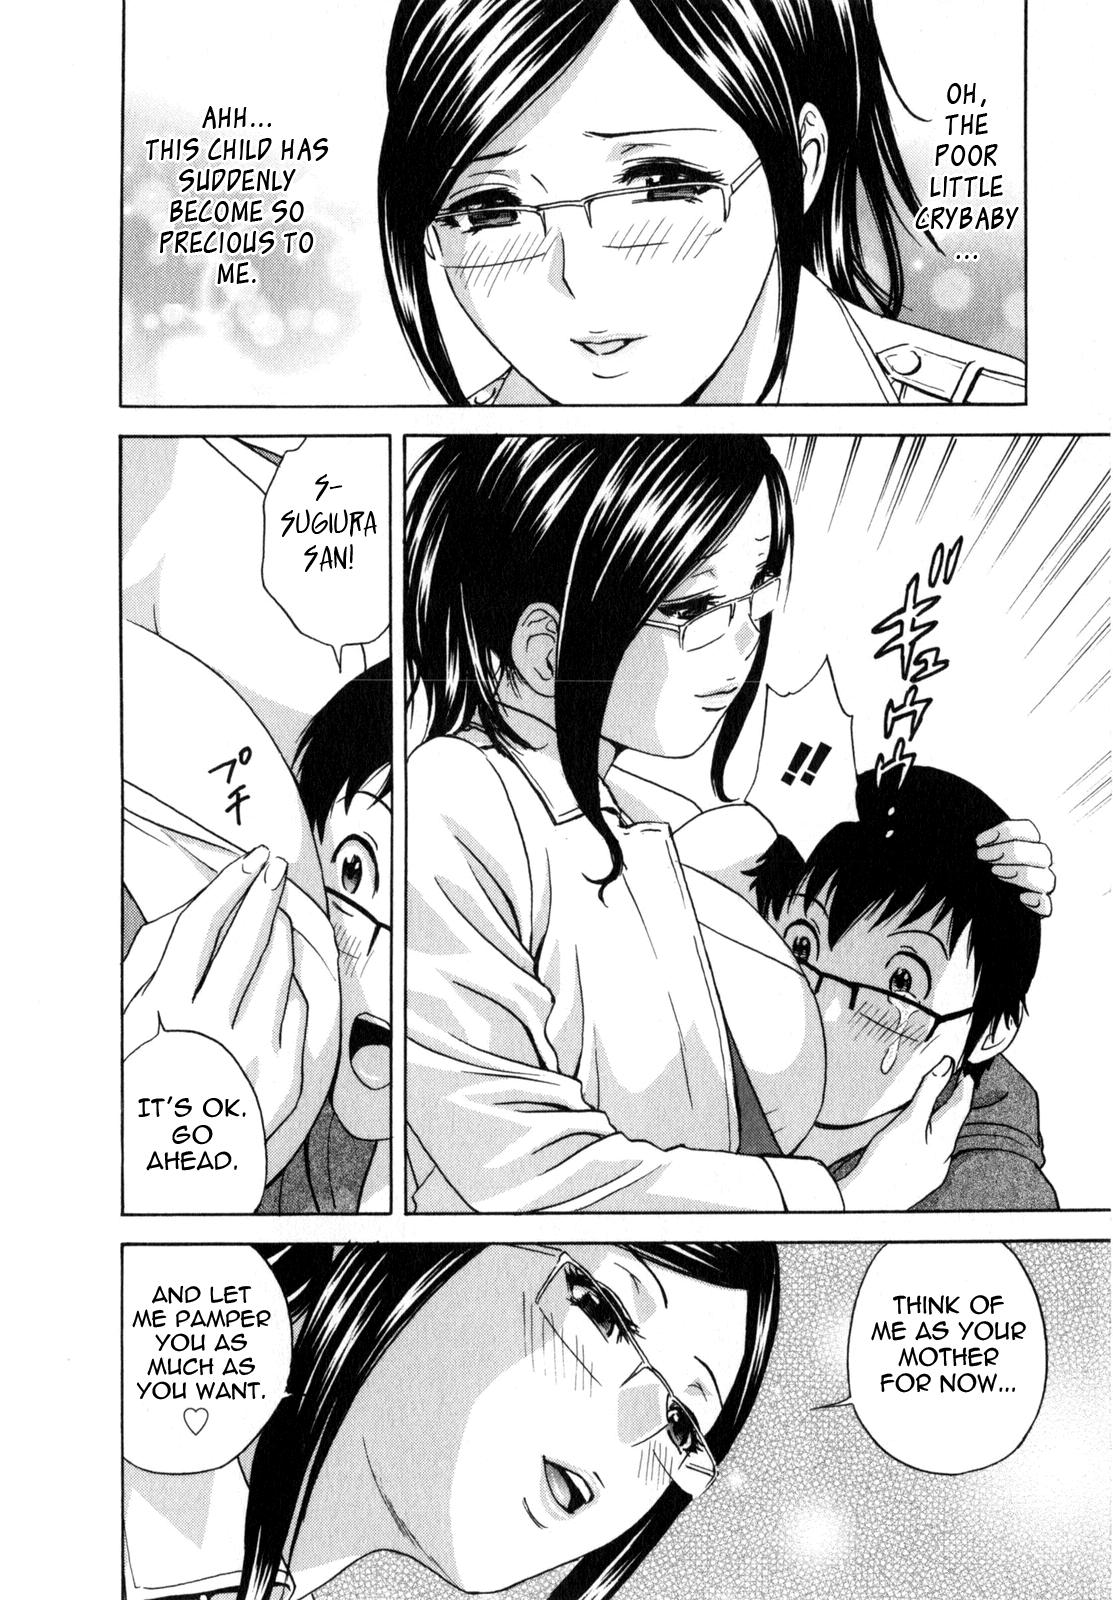 [Hidemaru] Life with Married Women Just Like a Manga 2 - Ch. 1-7 [English] {Tadanohito} 76